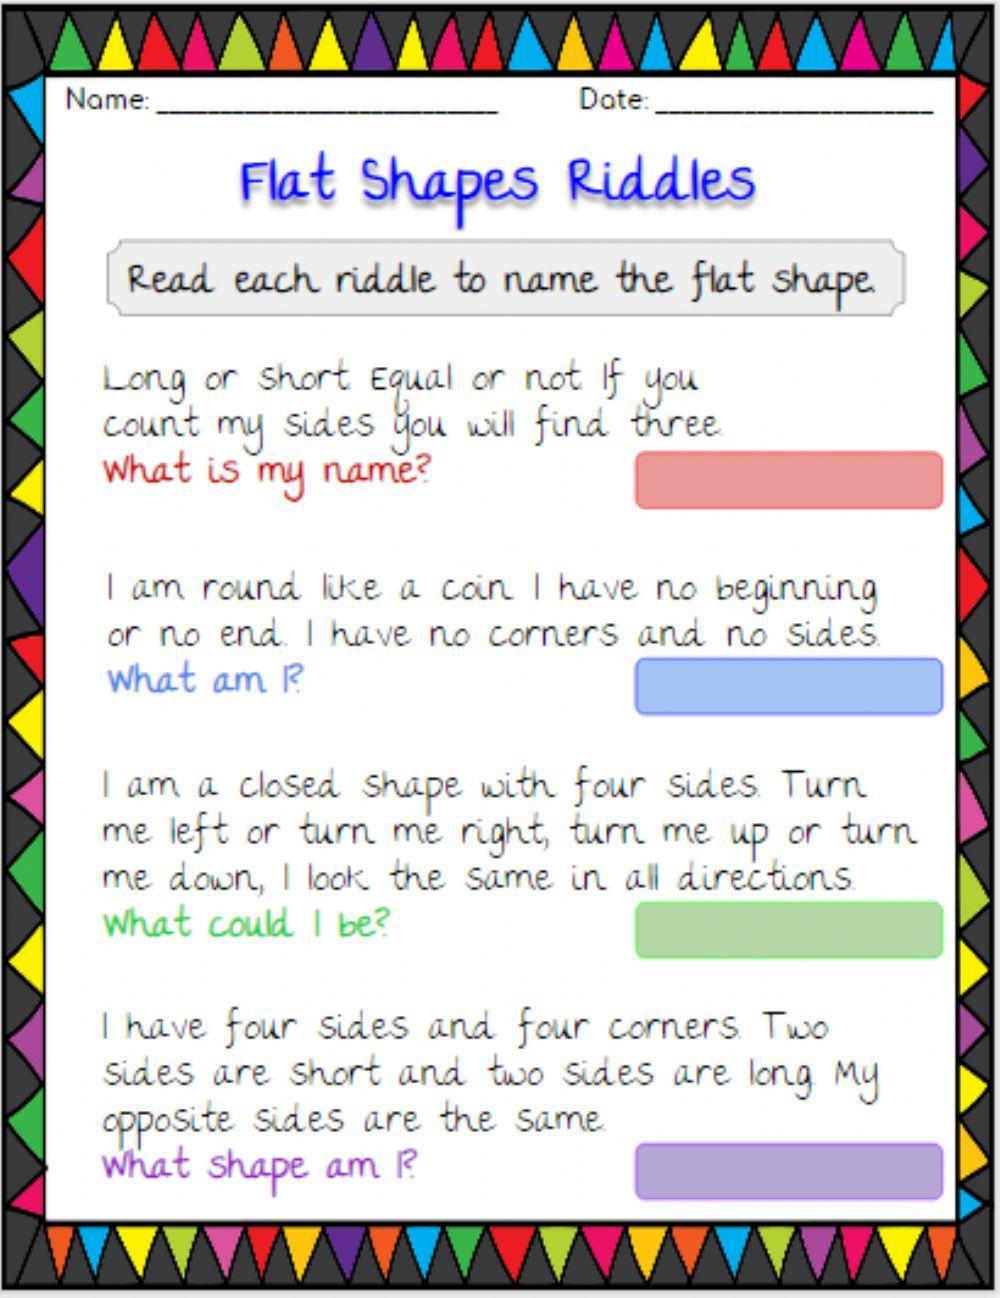 Flat Shapes Riddles